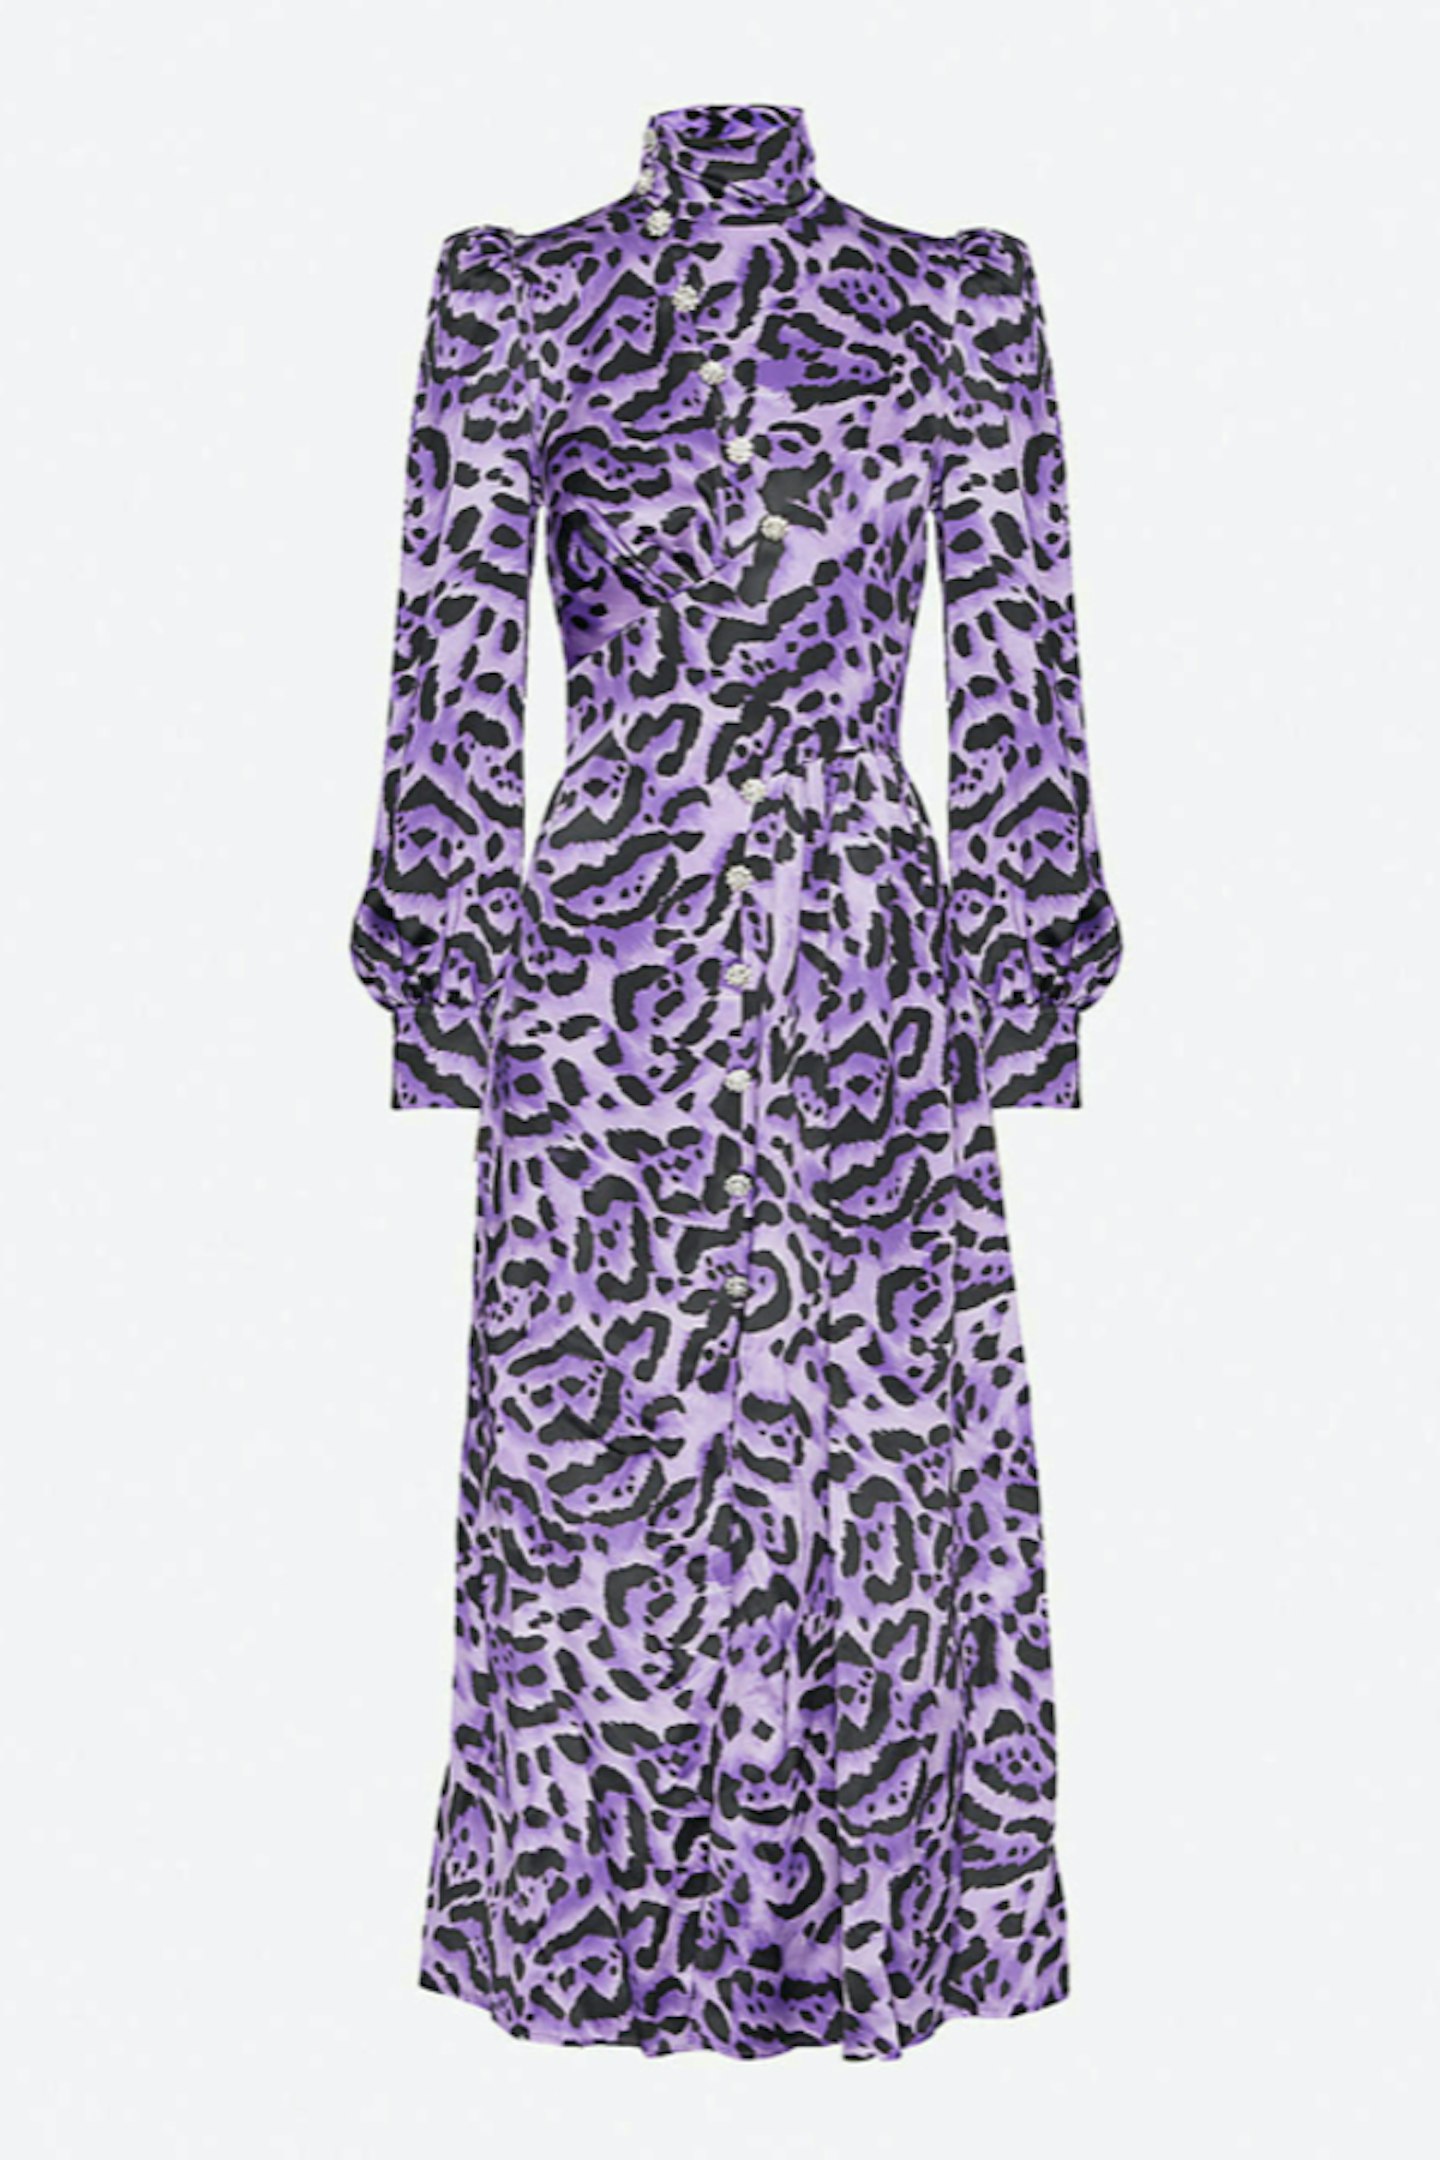 Alessandra Rich, High Neck Leopard Print Dress, Rent From £95